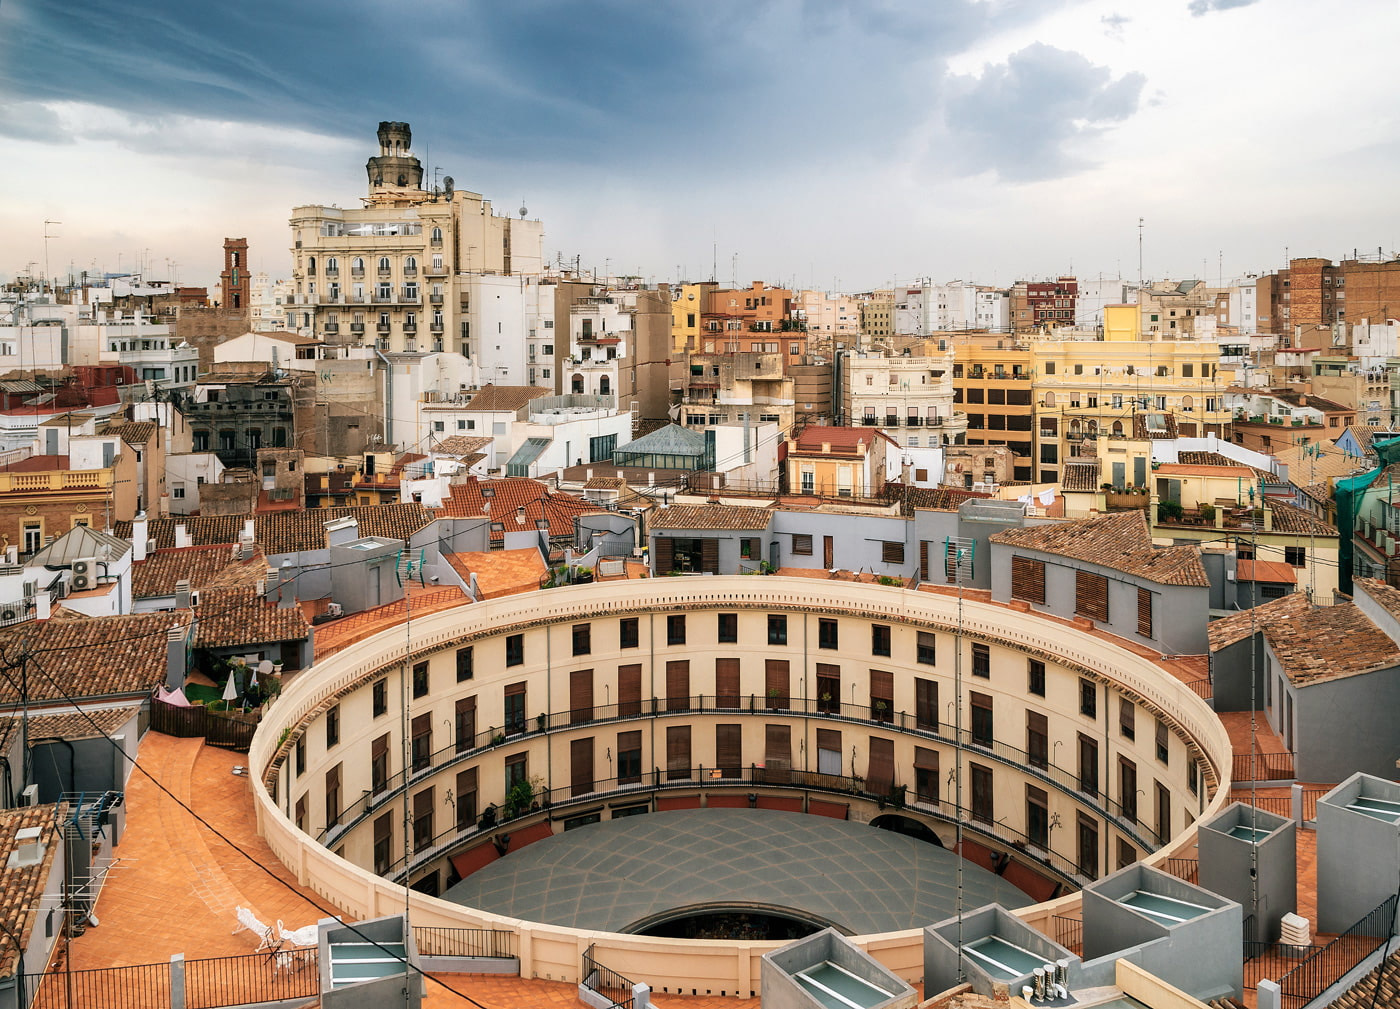 Aerial view of Plaza Redonda in Valencia